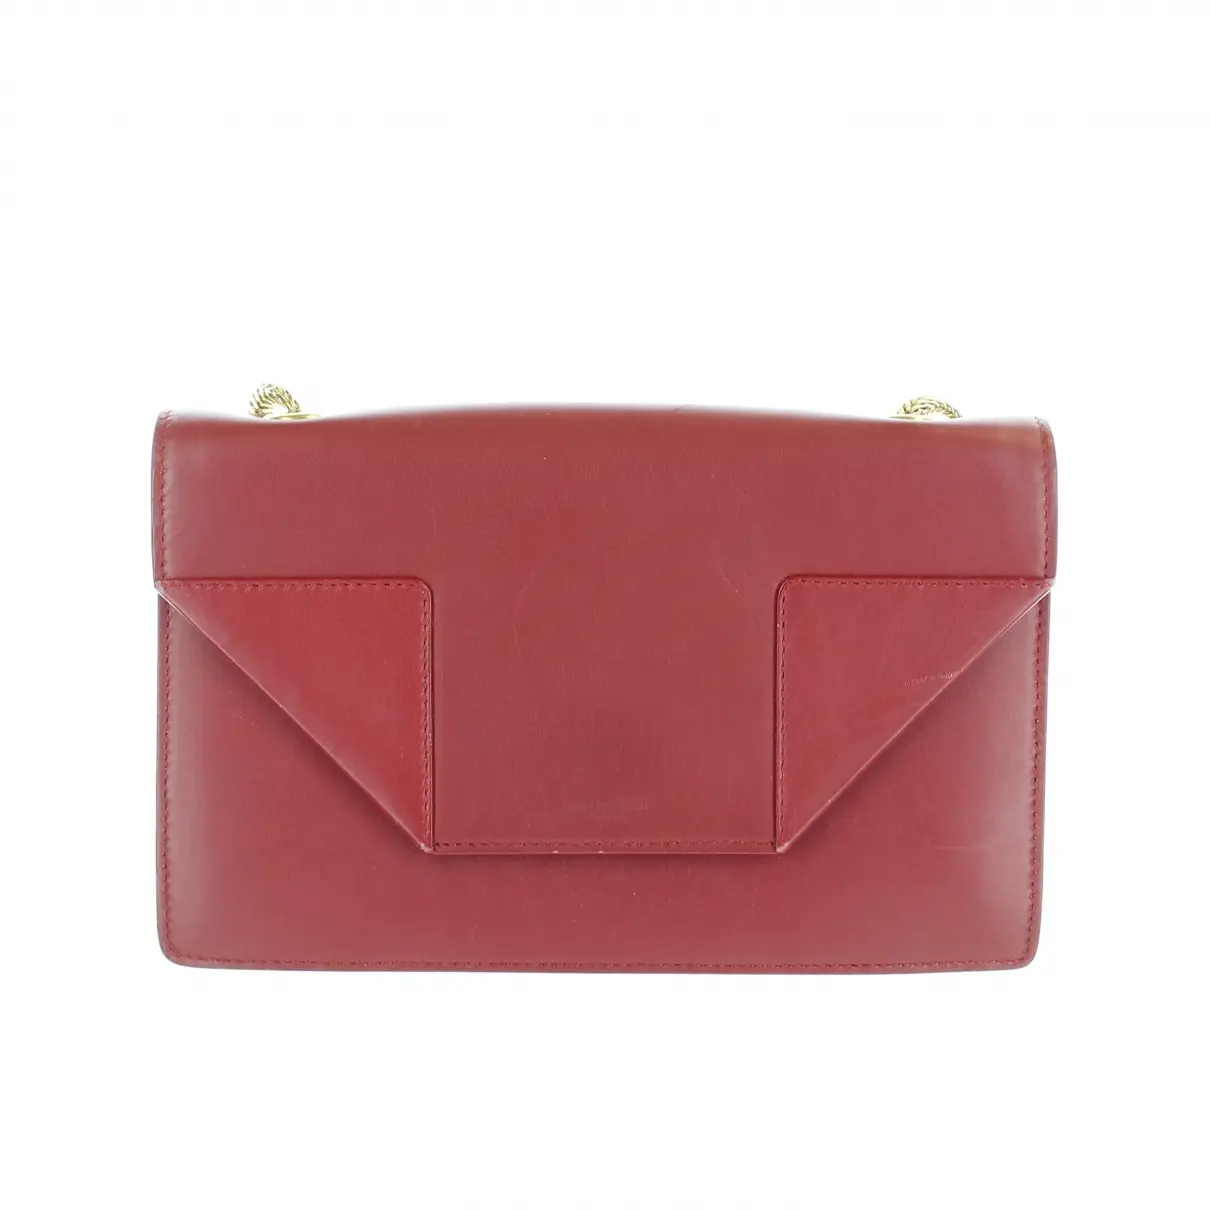 Betty leather handbag Saint Laurent